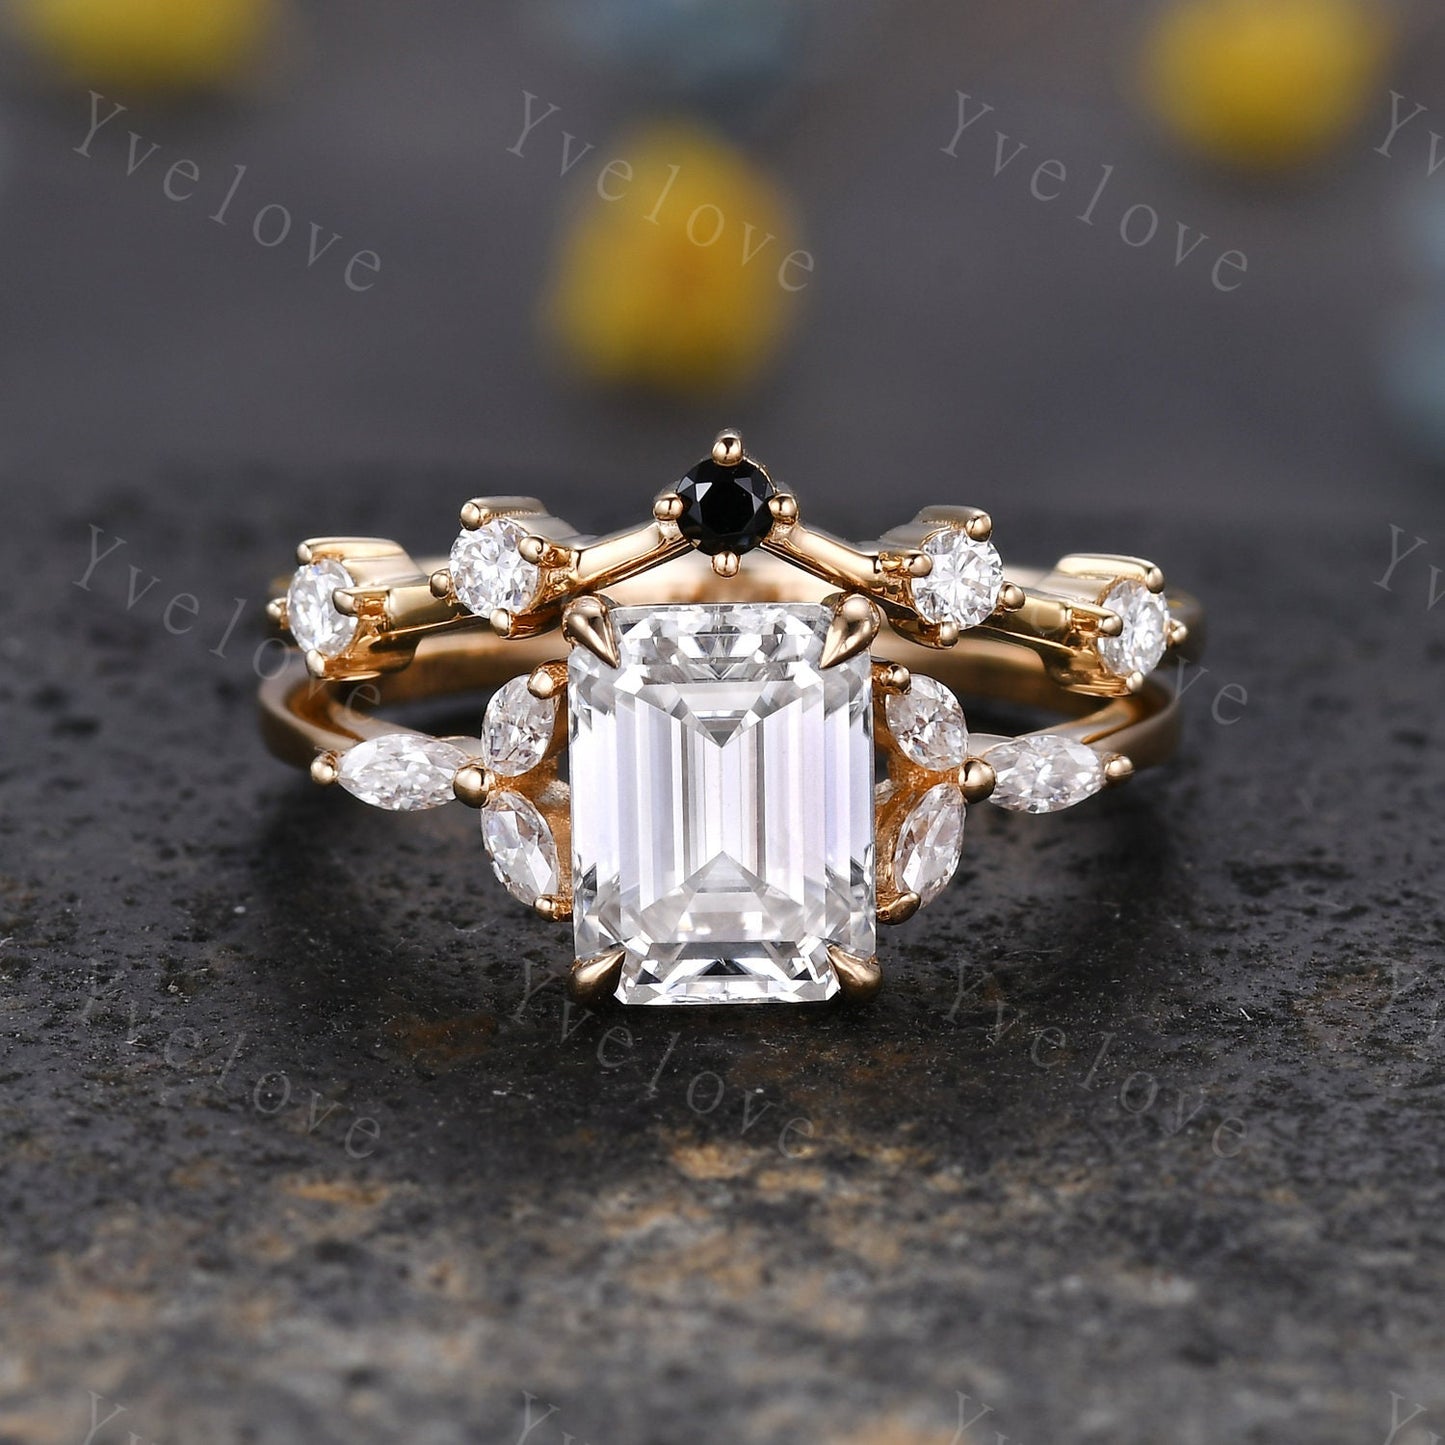 Vintage Moissanite Engagement Ring Emerald Cut Moissanite Gemstone Ring Floral Split Shank Diamond Ring Bridal Ring Gift 10k Solid Gold Ring